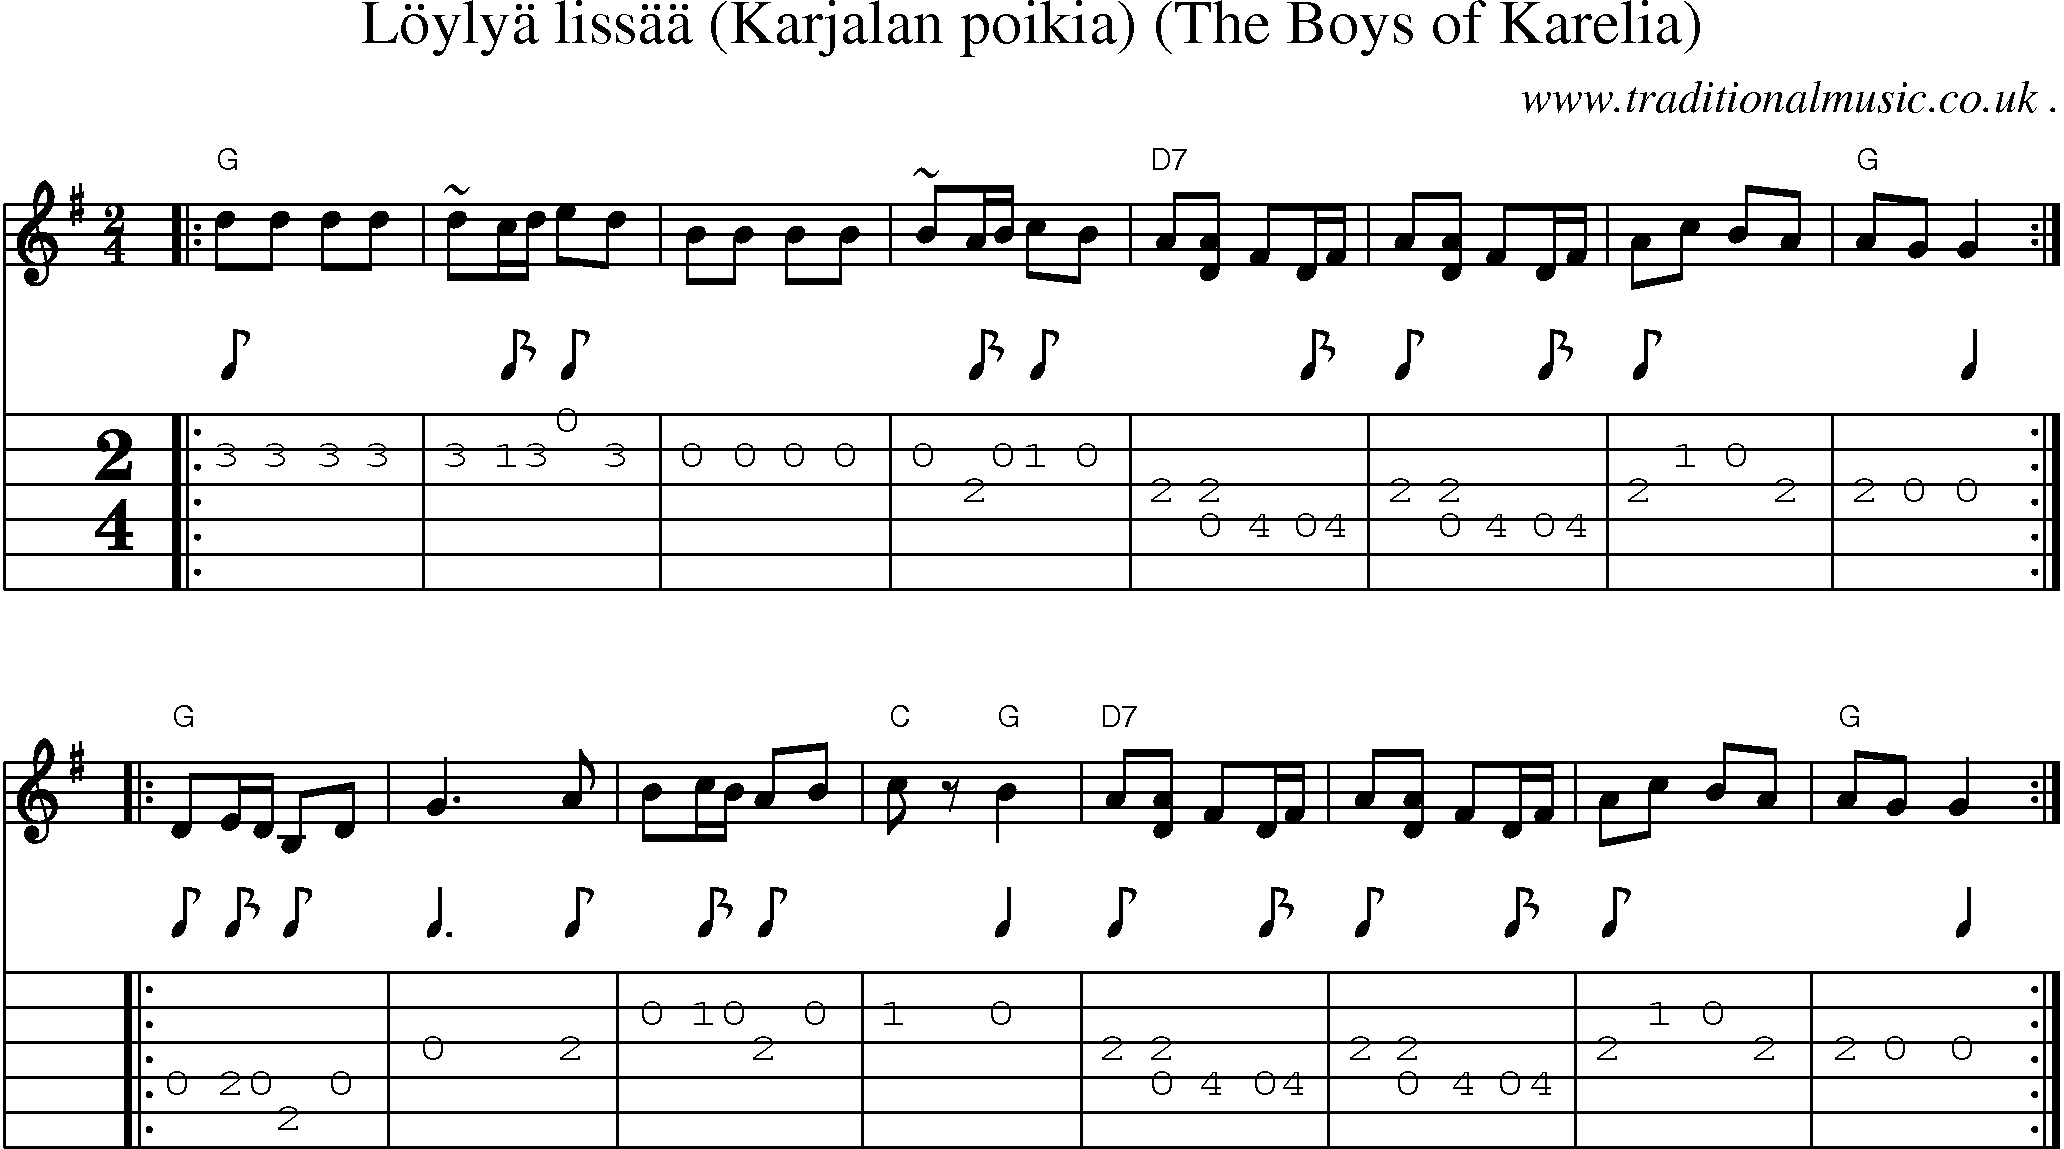 Sheet-music  score, Chords and Guitar Tabs for Loylya Lissaa Karjalan Poikia The Boys Of Karelia